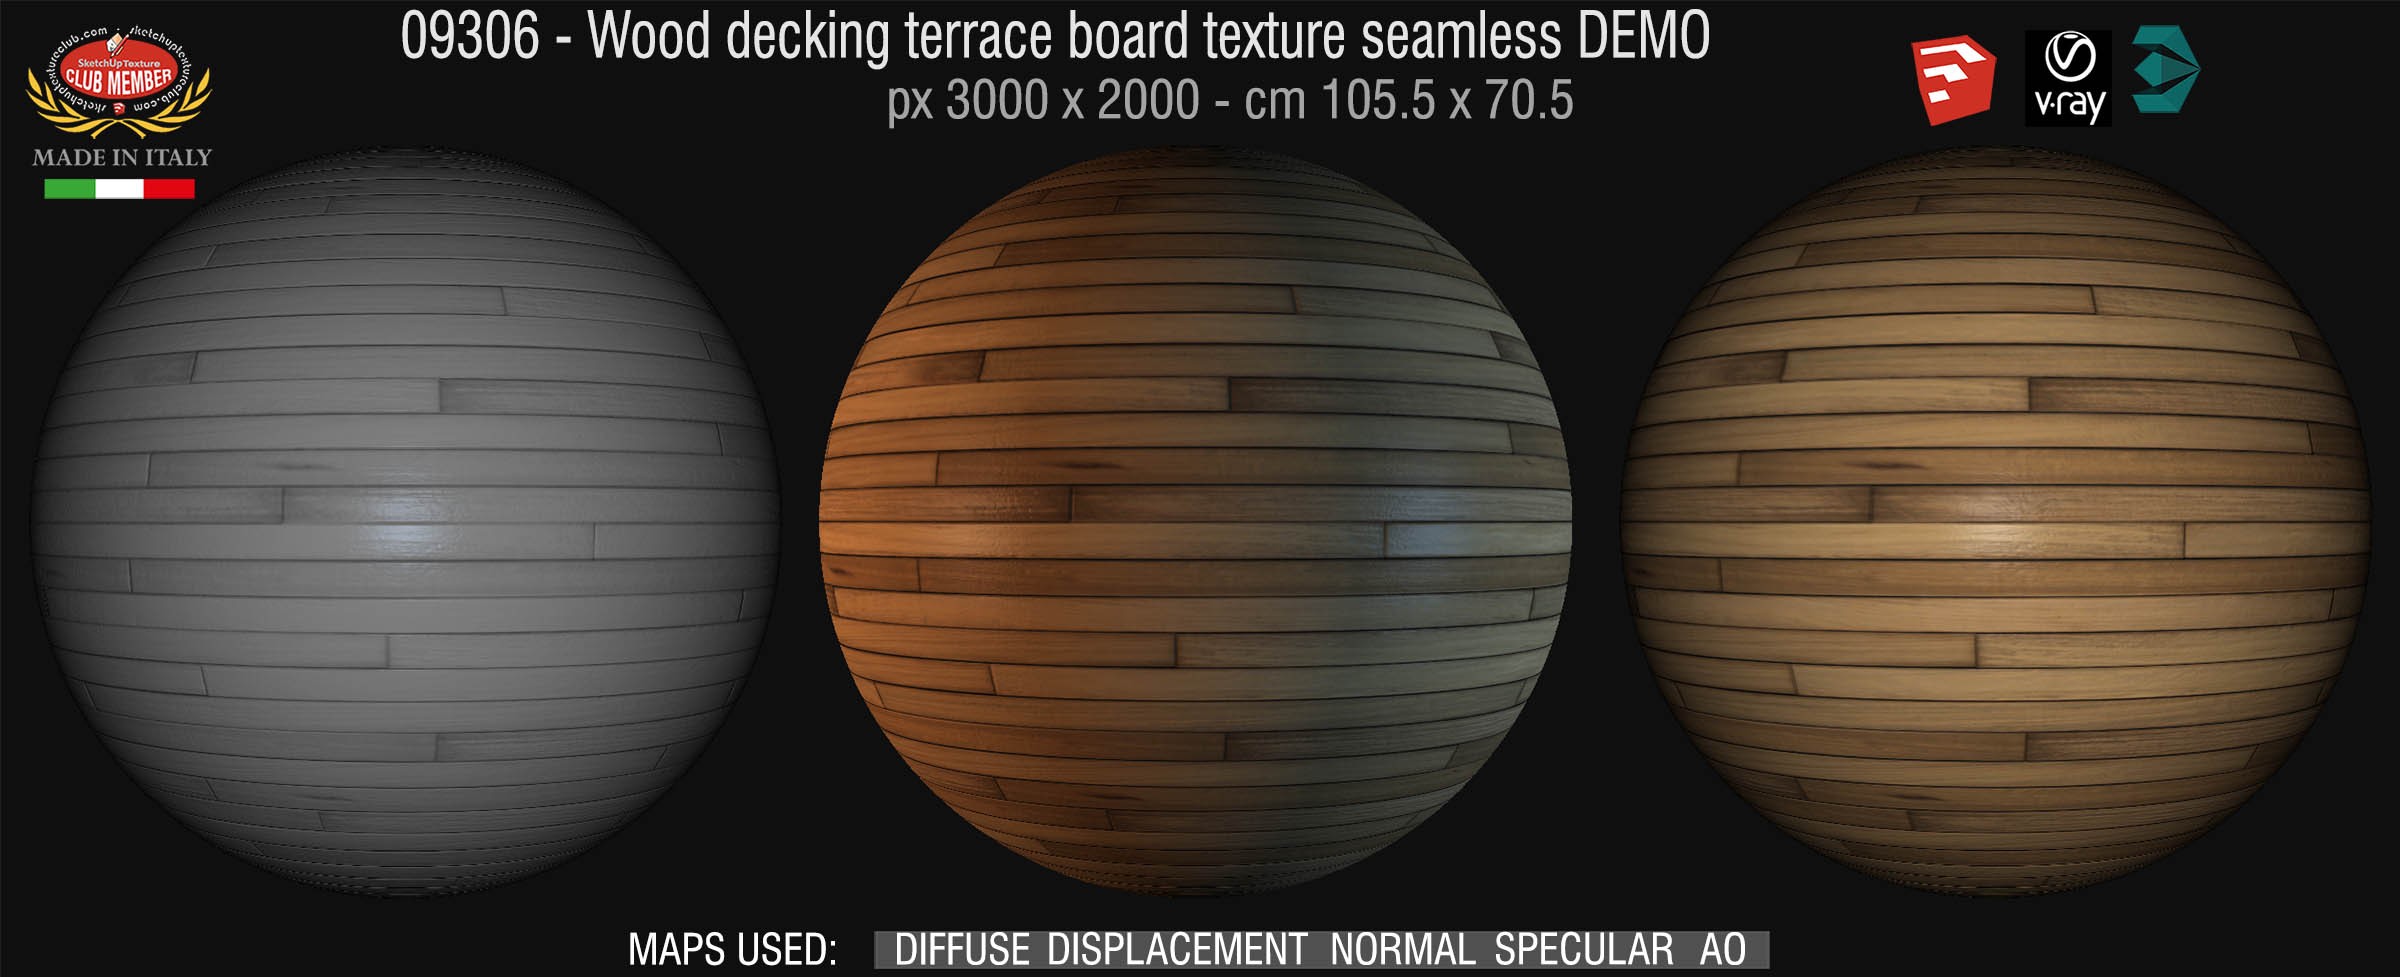 09306 HR Wood decking terrace board texture seamless + maps DEMO